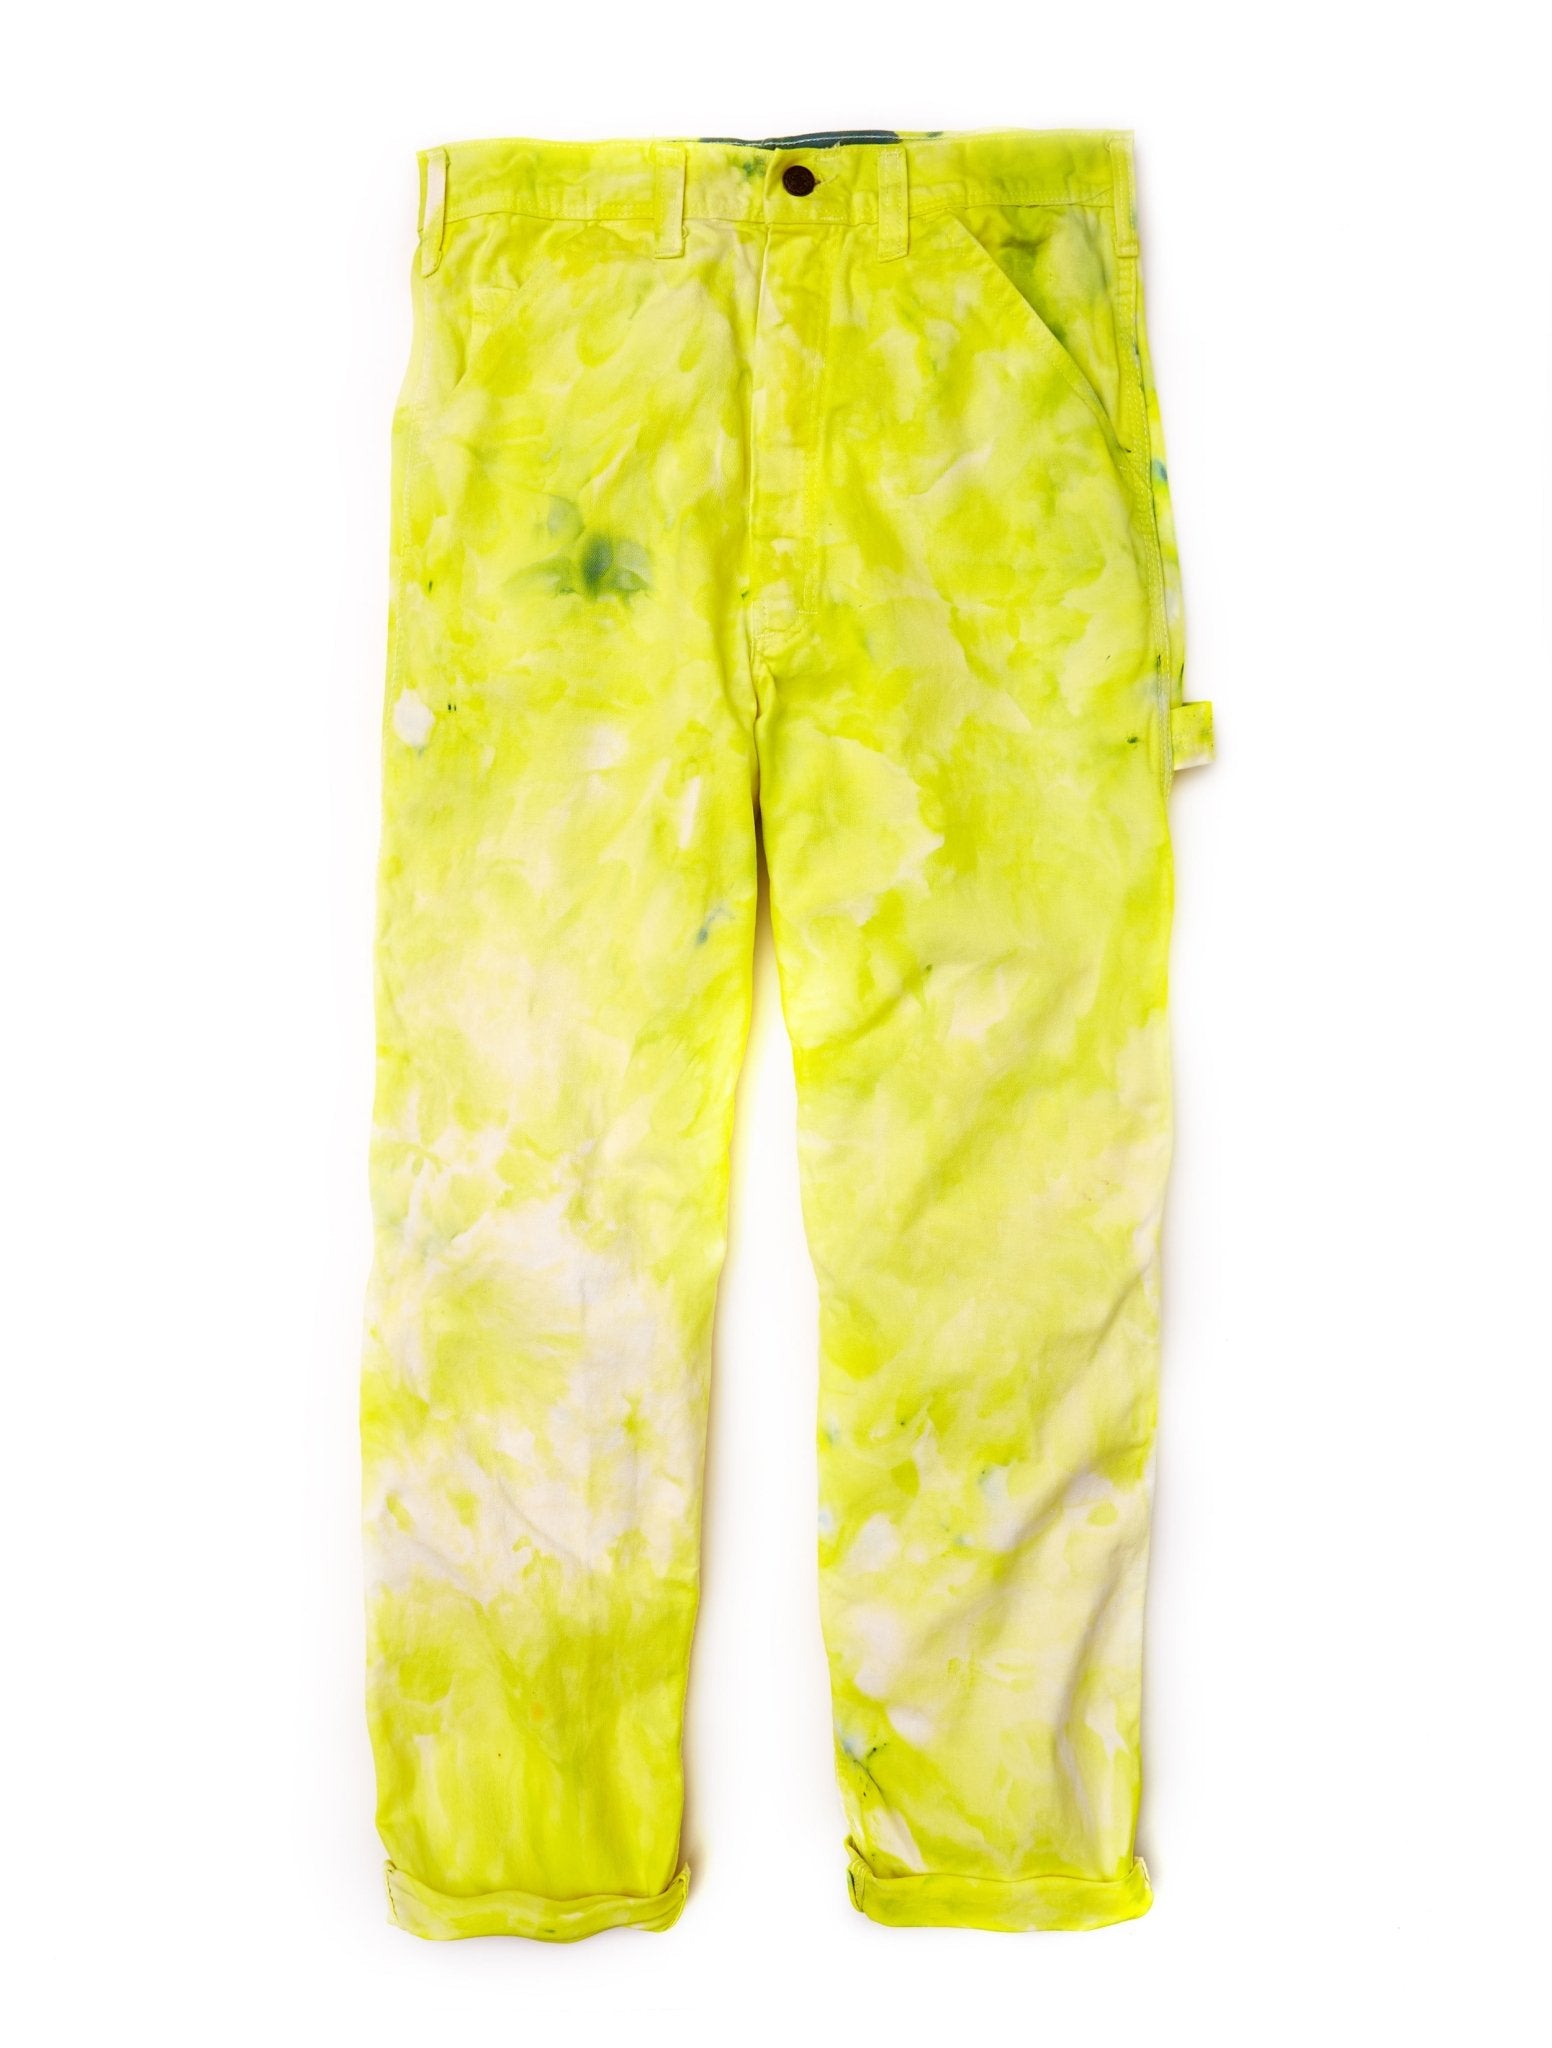 Painter's Pants in Wasabi – riverside tool & dye